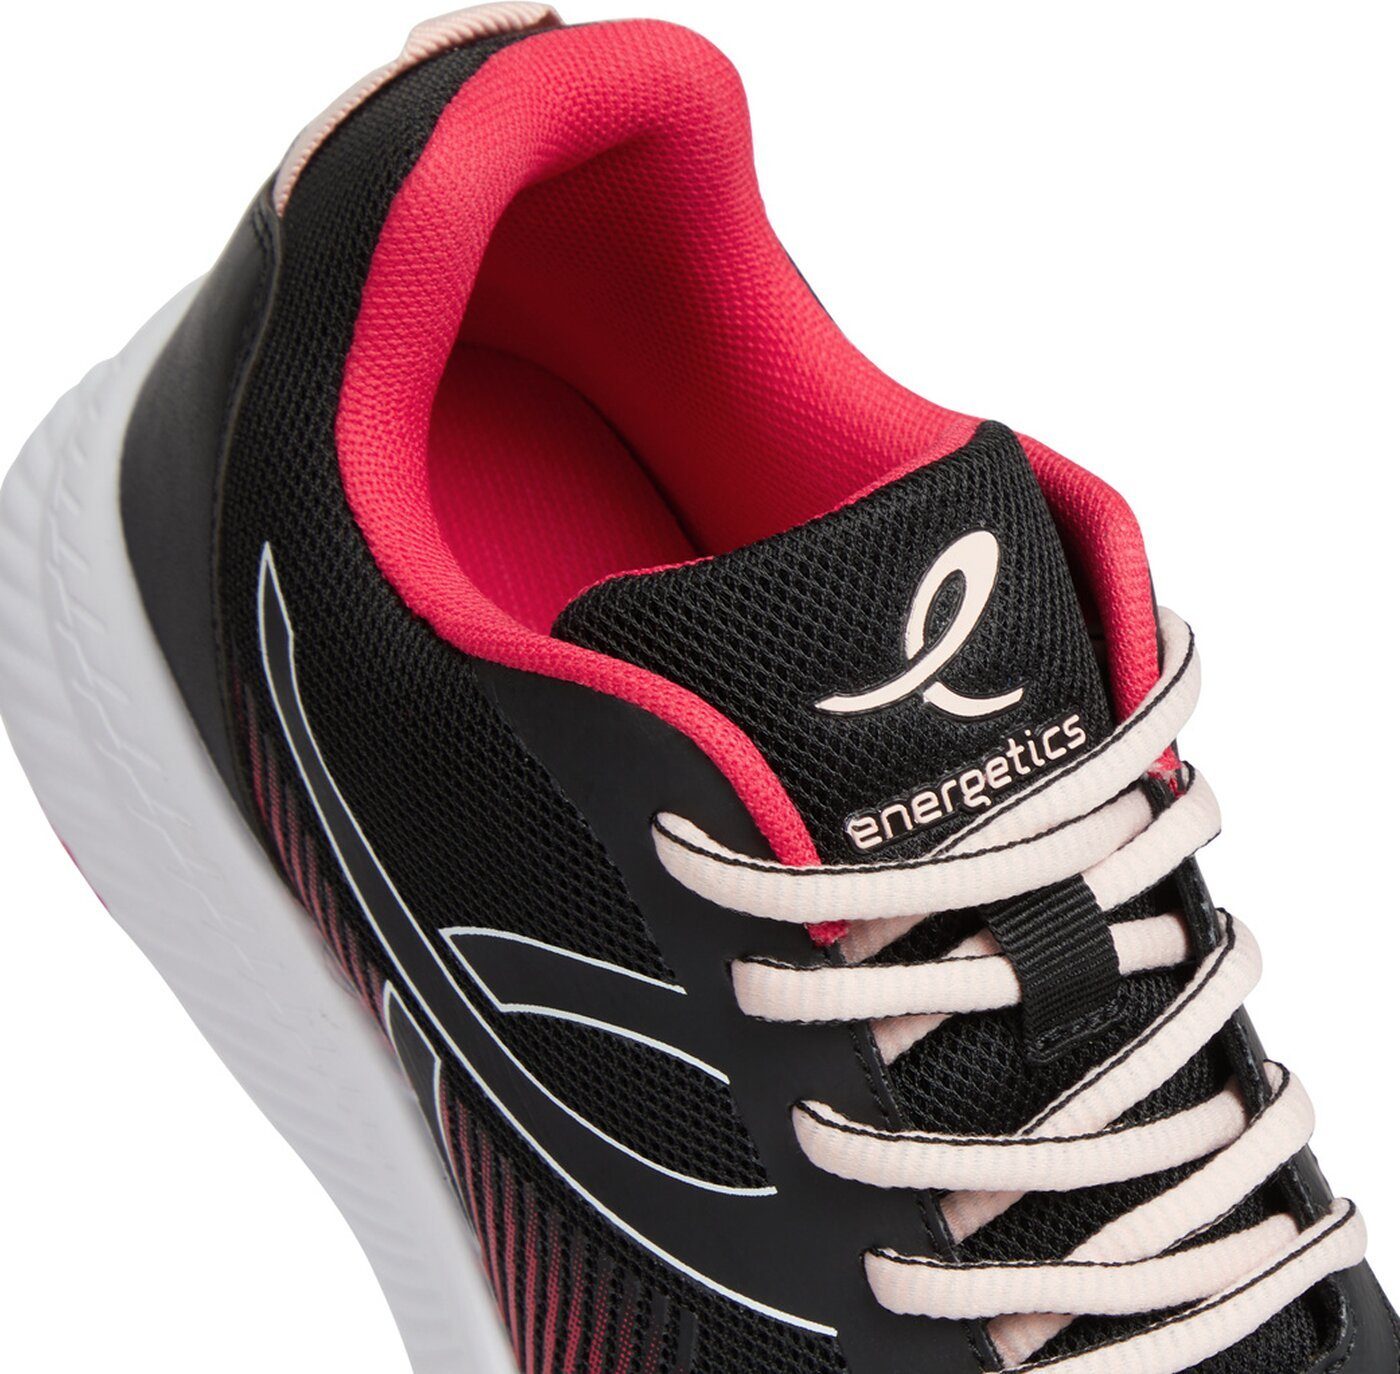 Energetics Ki.-Running-Schuh Roadrunner Sneaker J IV 901